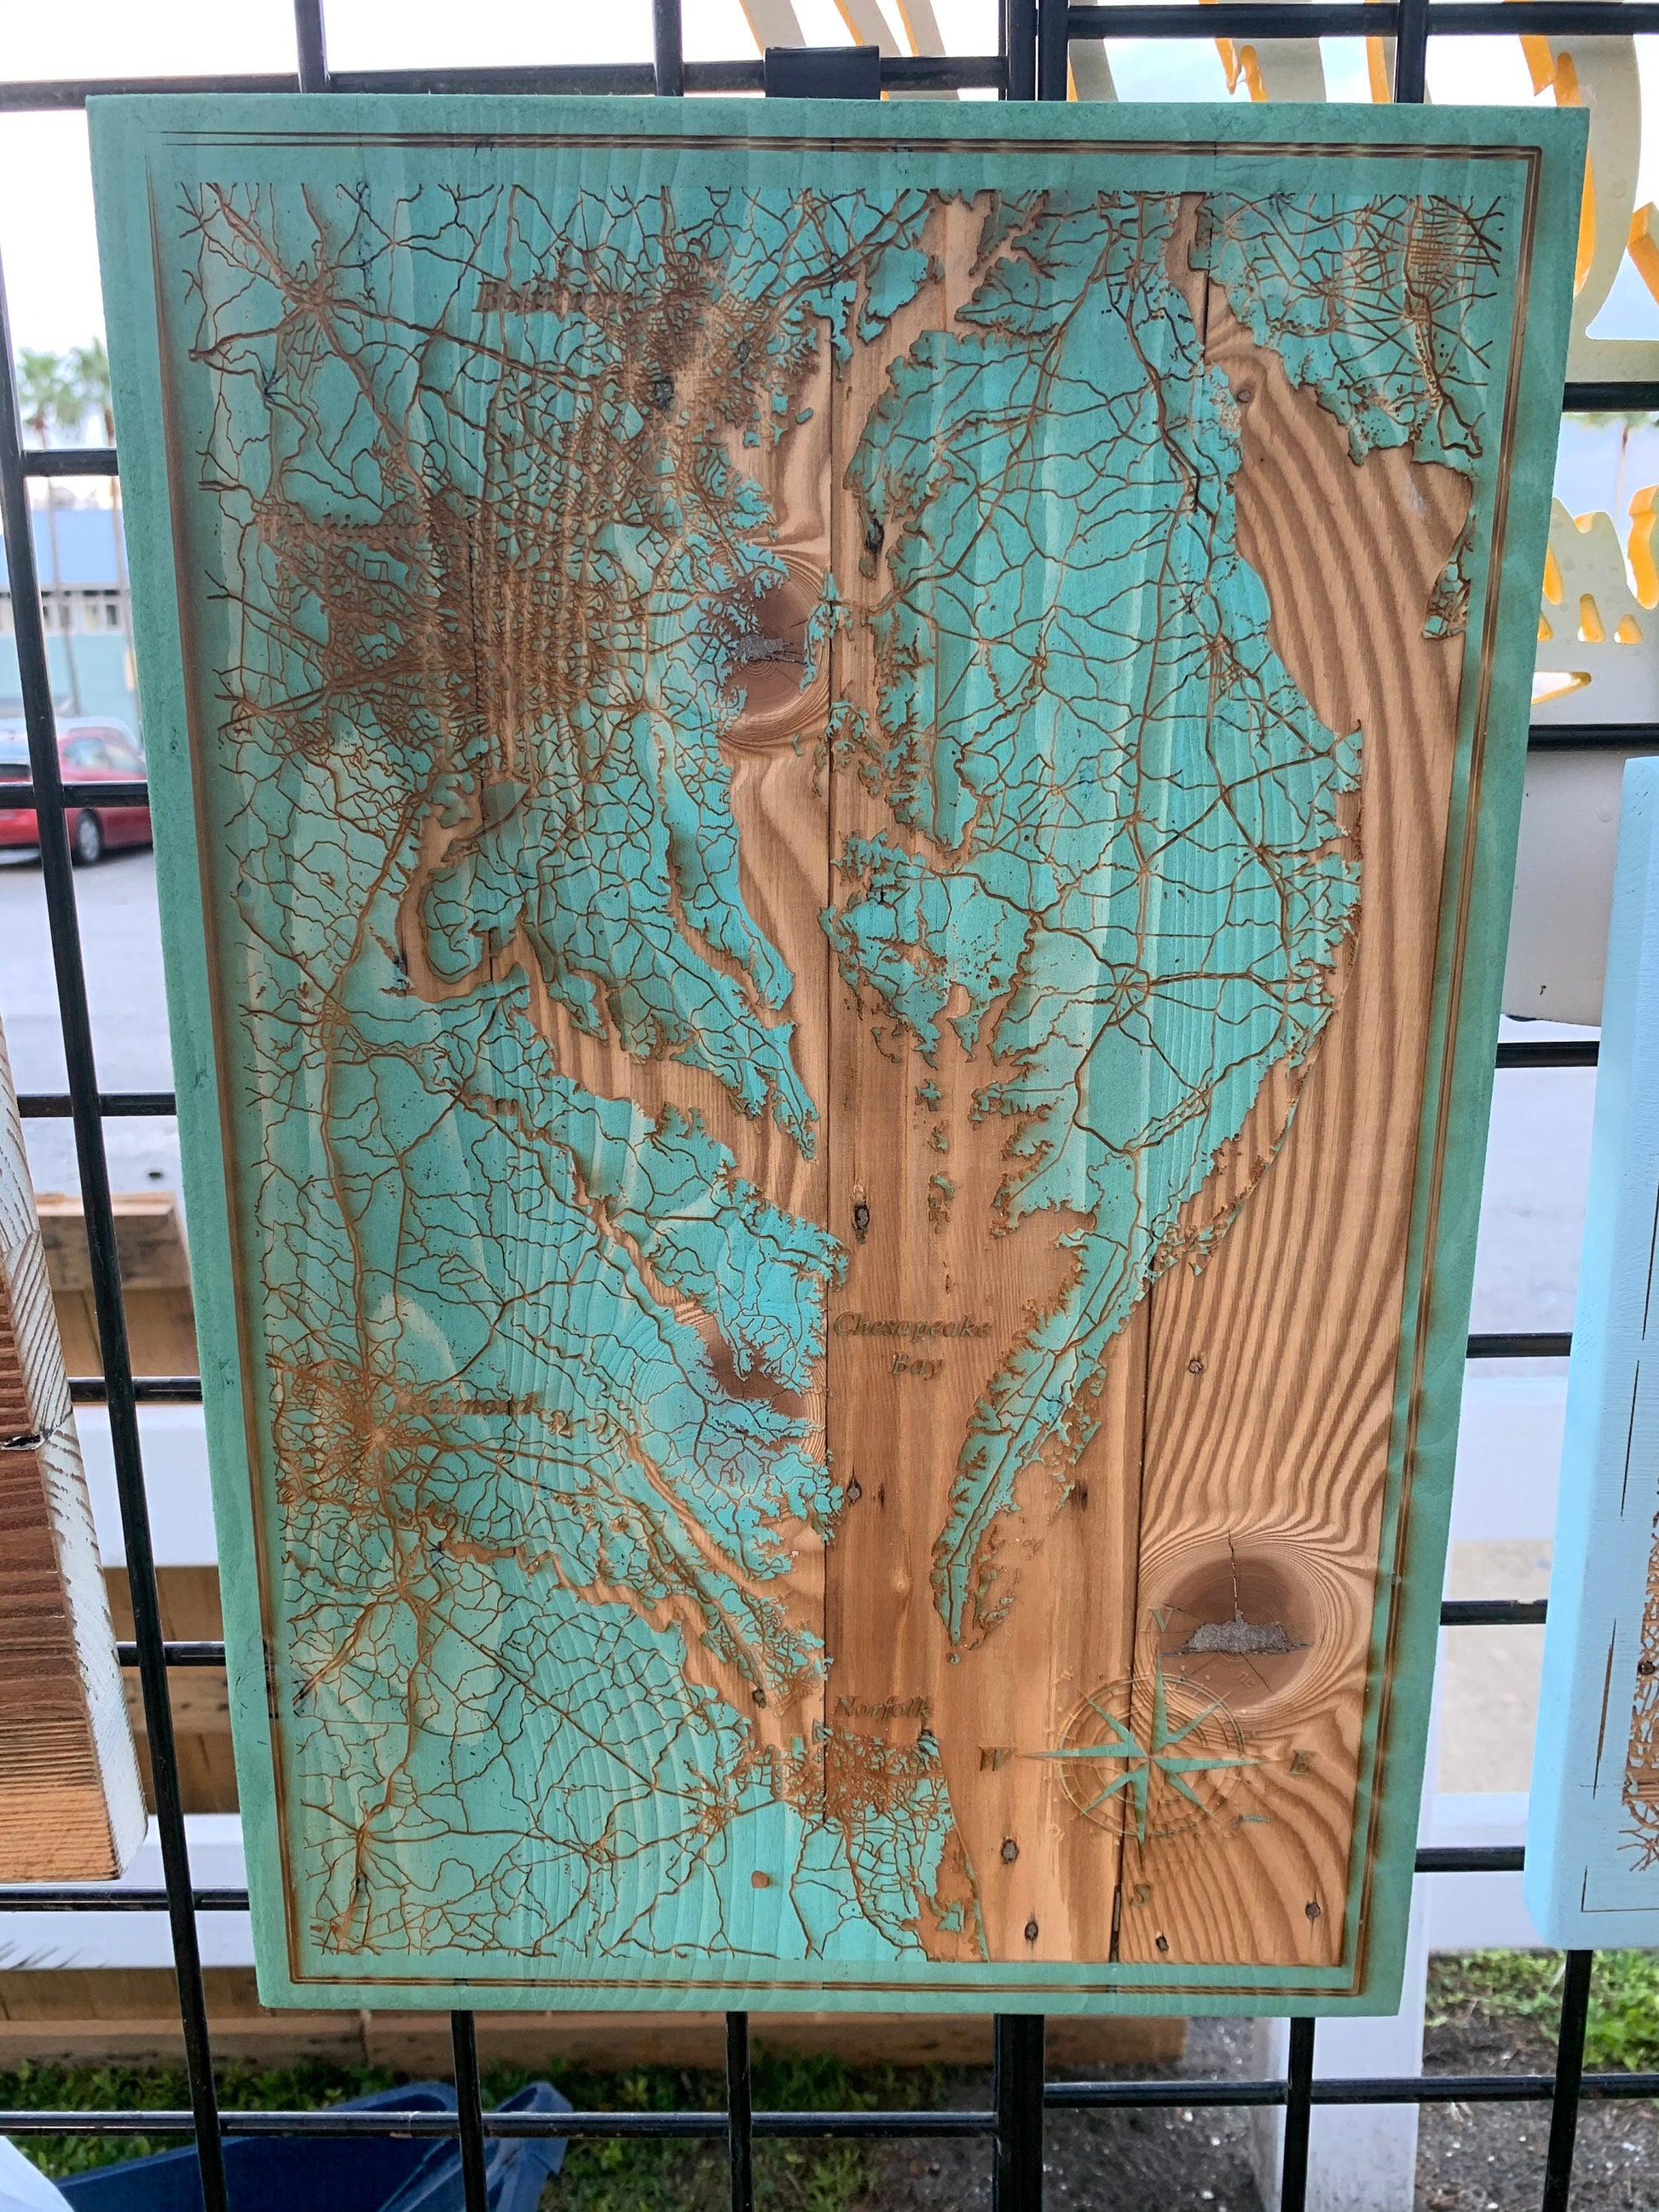 Chesapeake Bay 3D Wood Map